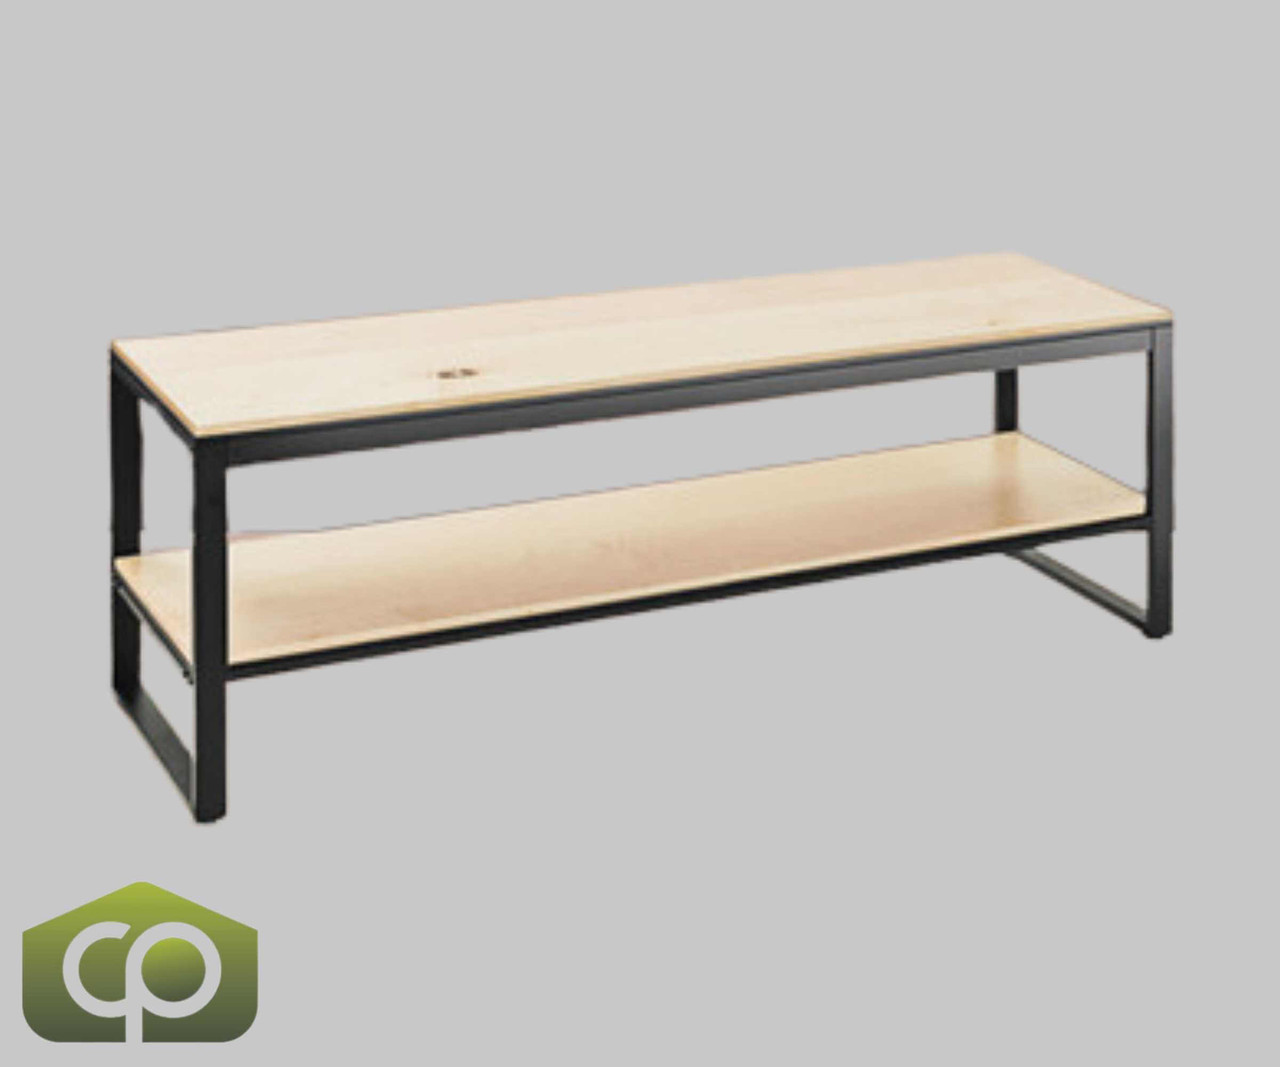 Cal-Mil Blonde 64 1/2" x 18" x 24 1/4" Maple Nesting Merchandising Table | Versatile Presentation Solution